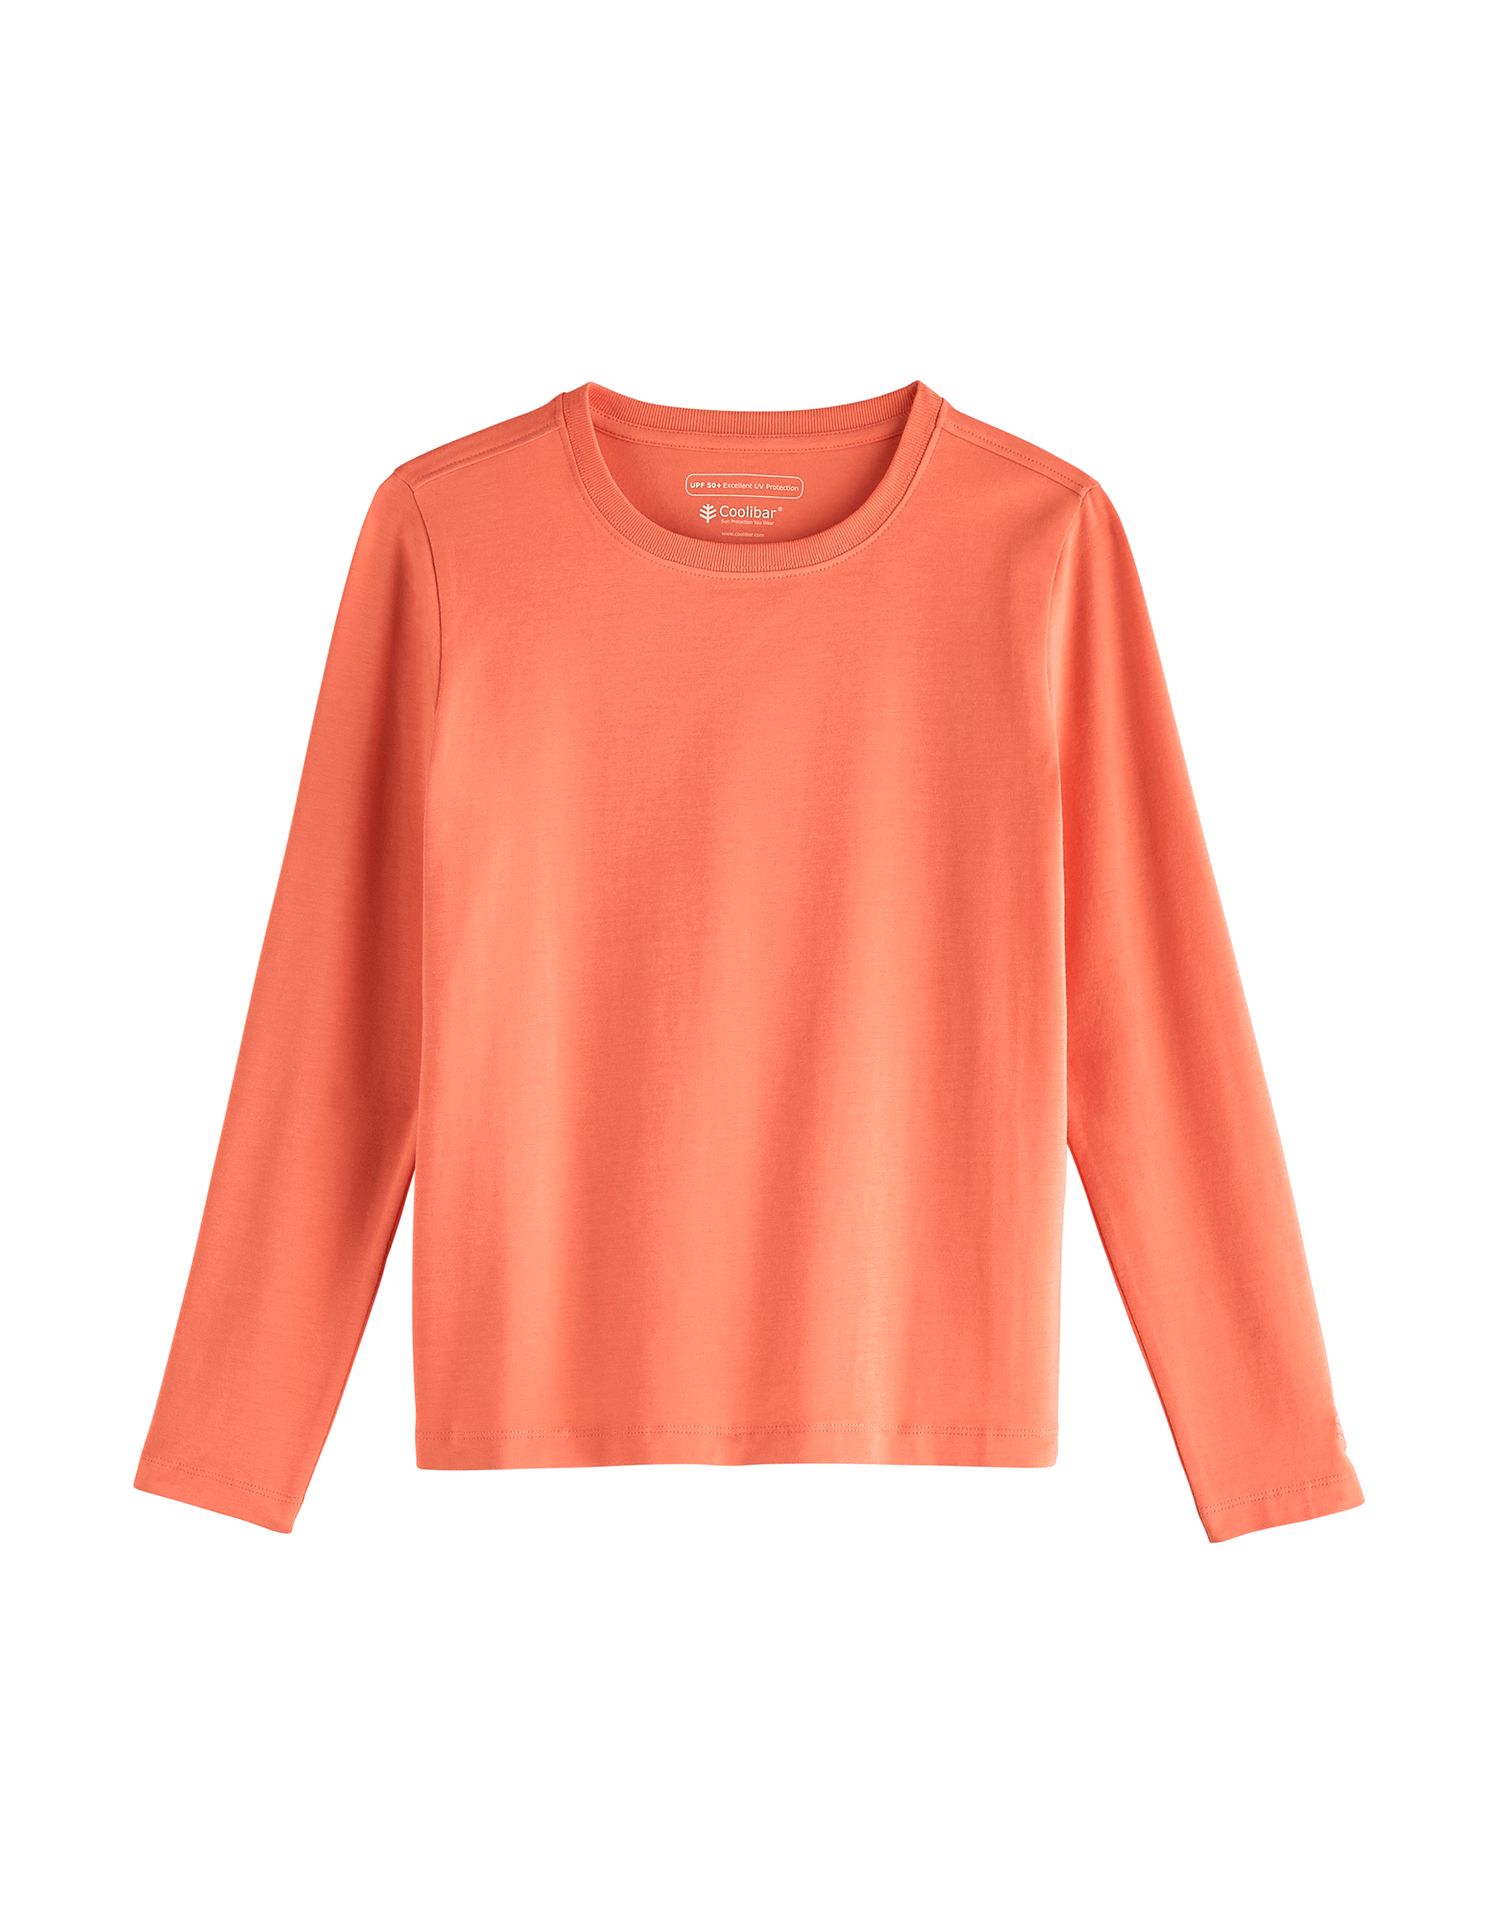 Coolibar - UV Shirt for kids - Longsleeve - Coco Plum - Soft Coral